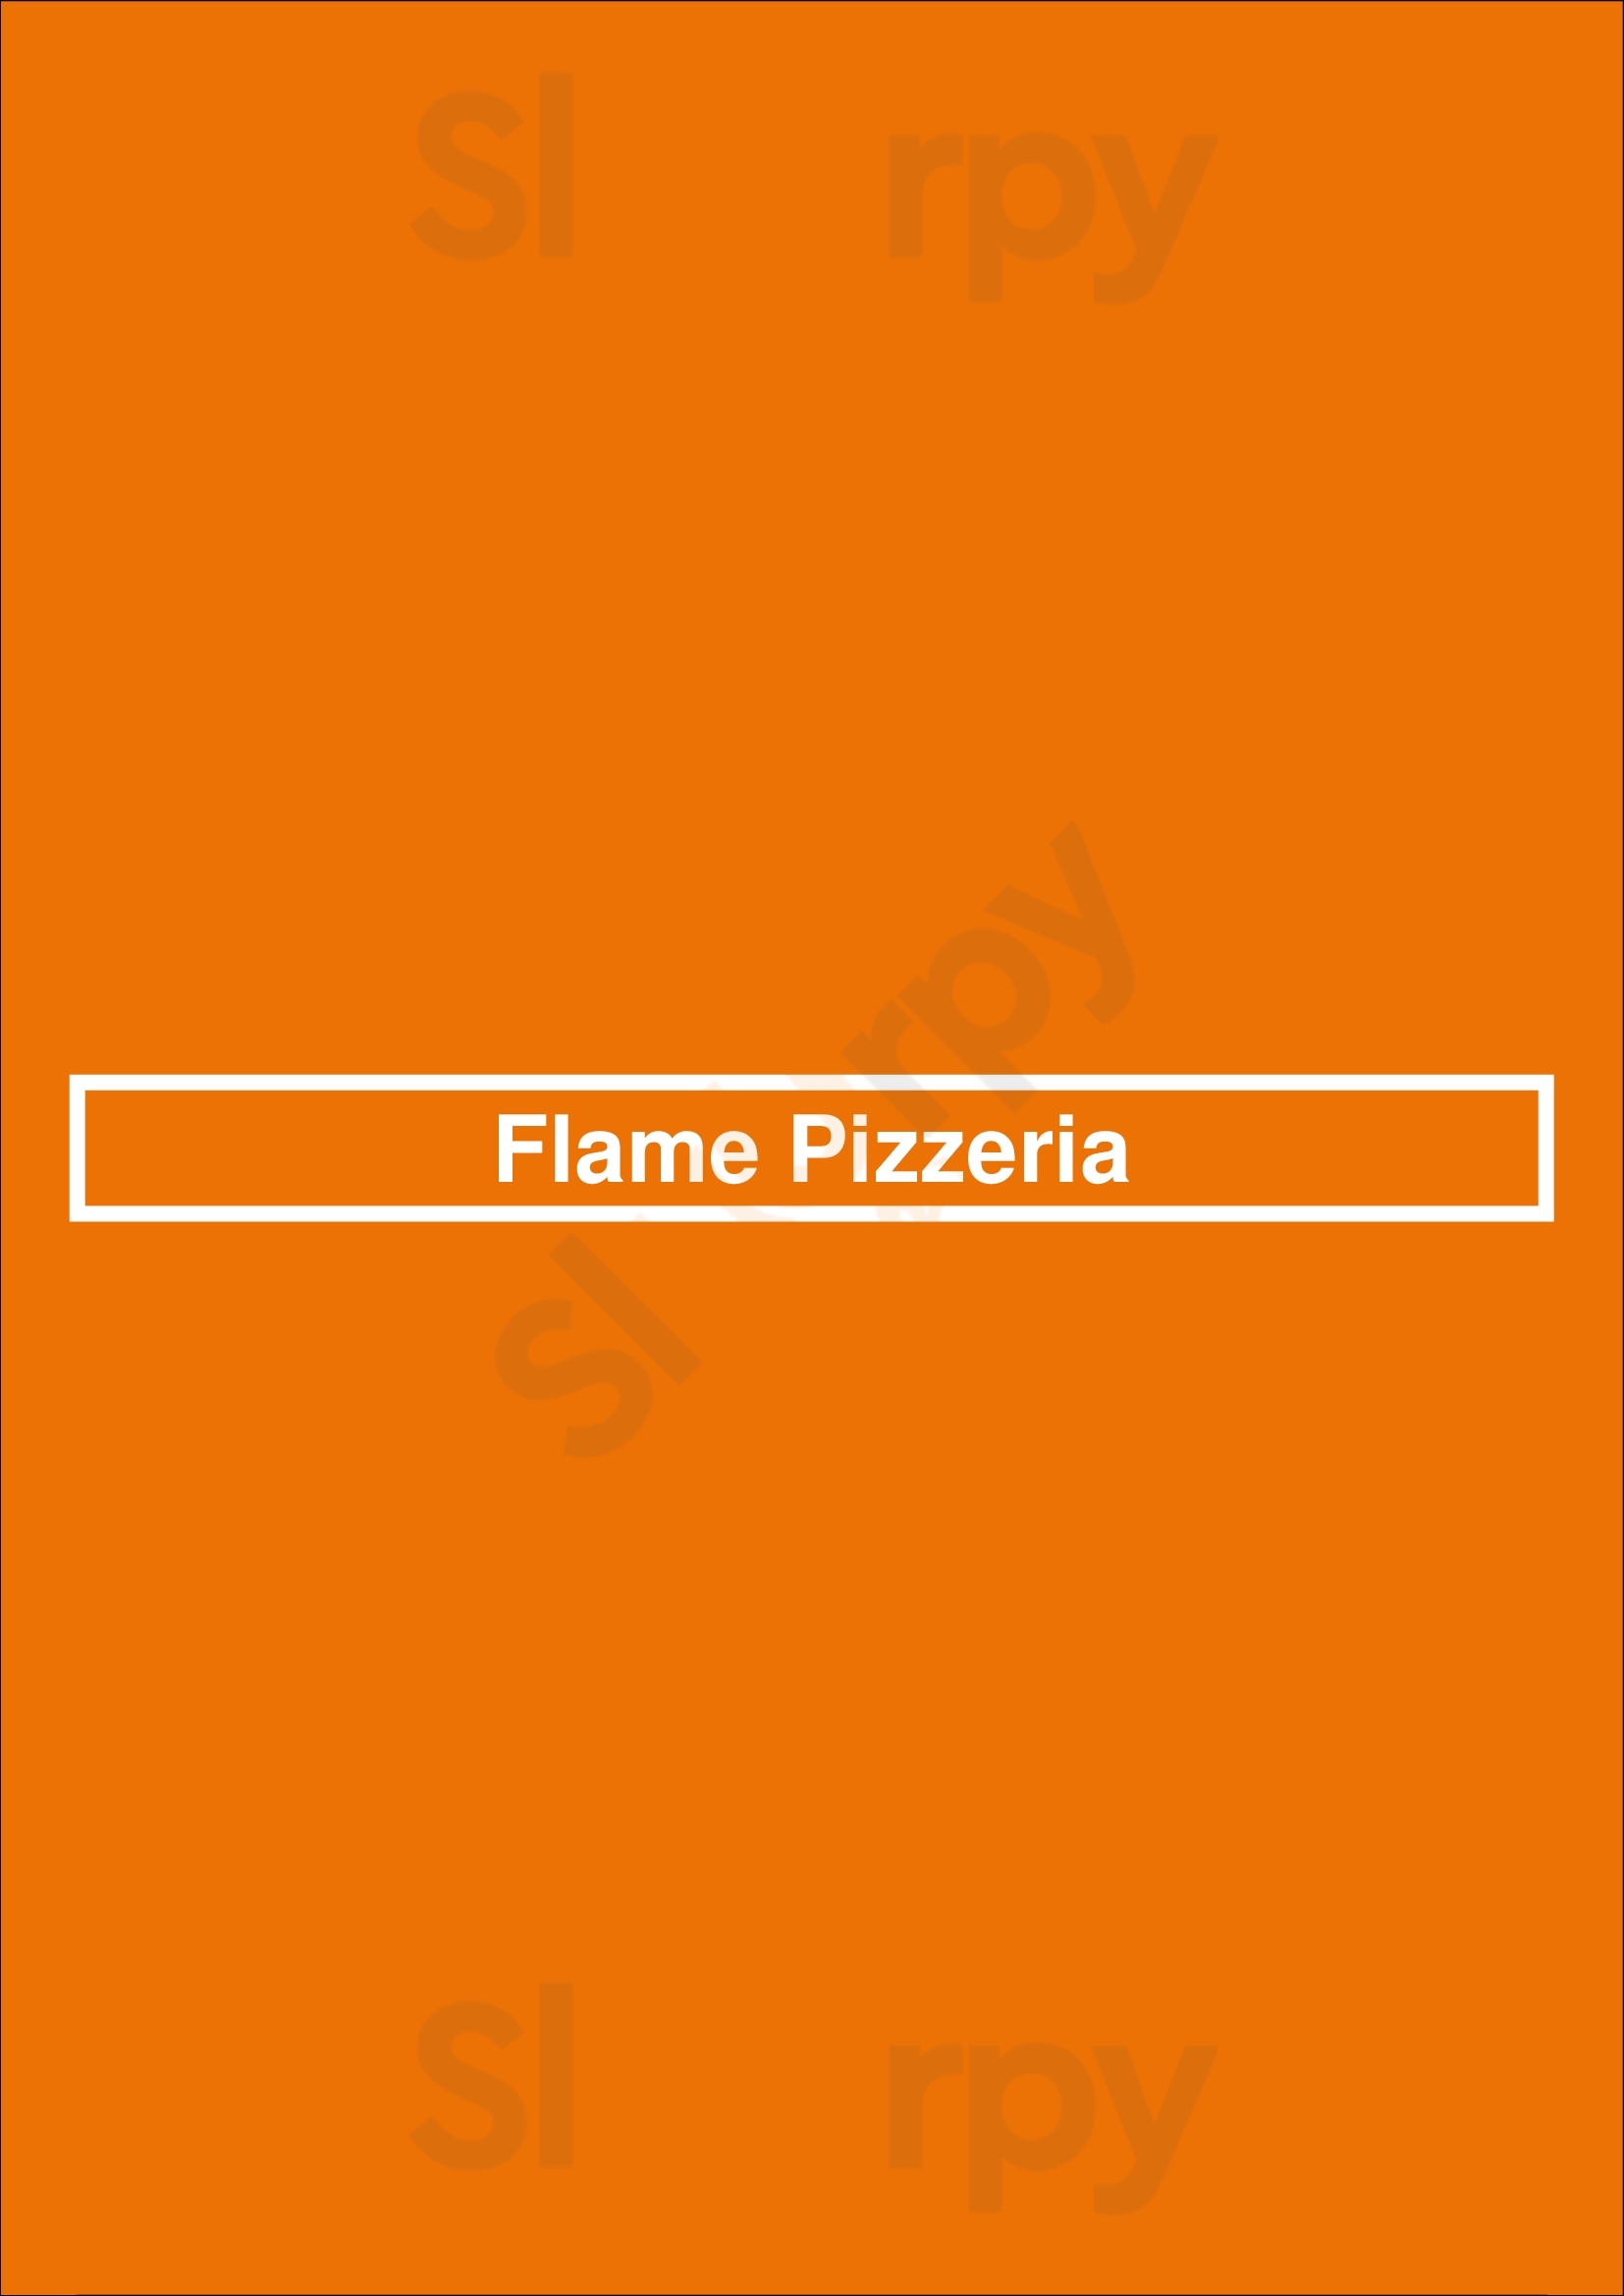 Flame Pizzeria Los Angeles Menu - 1